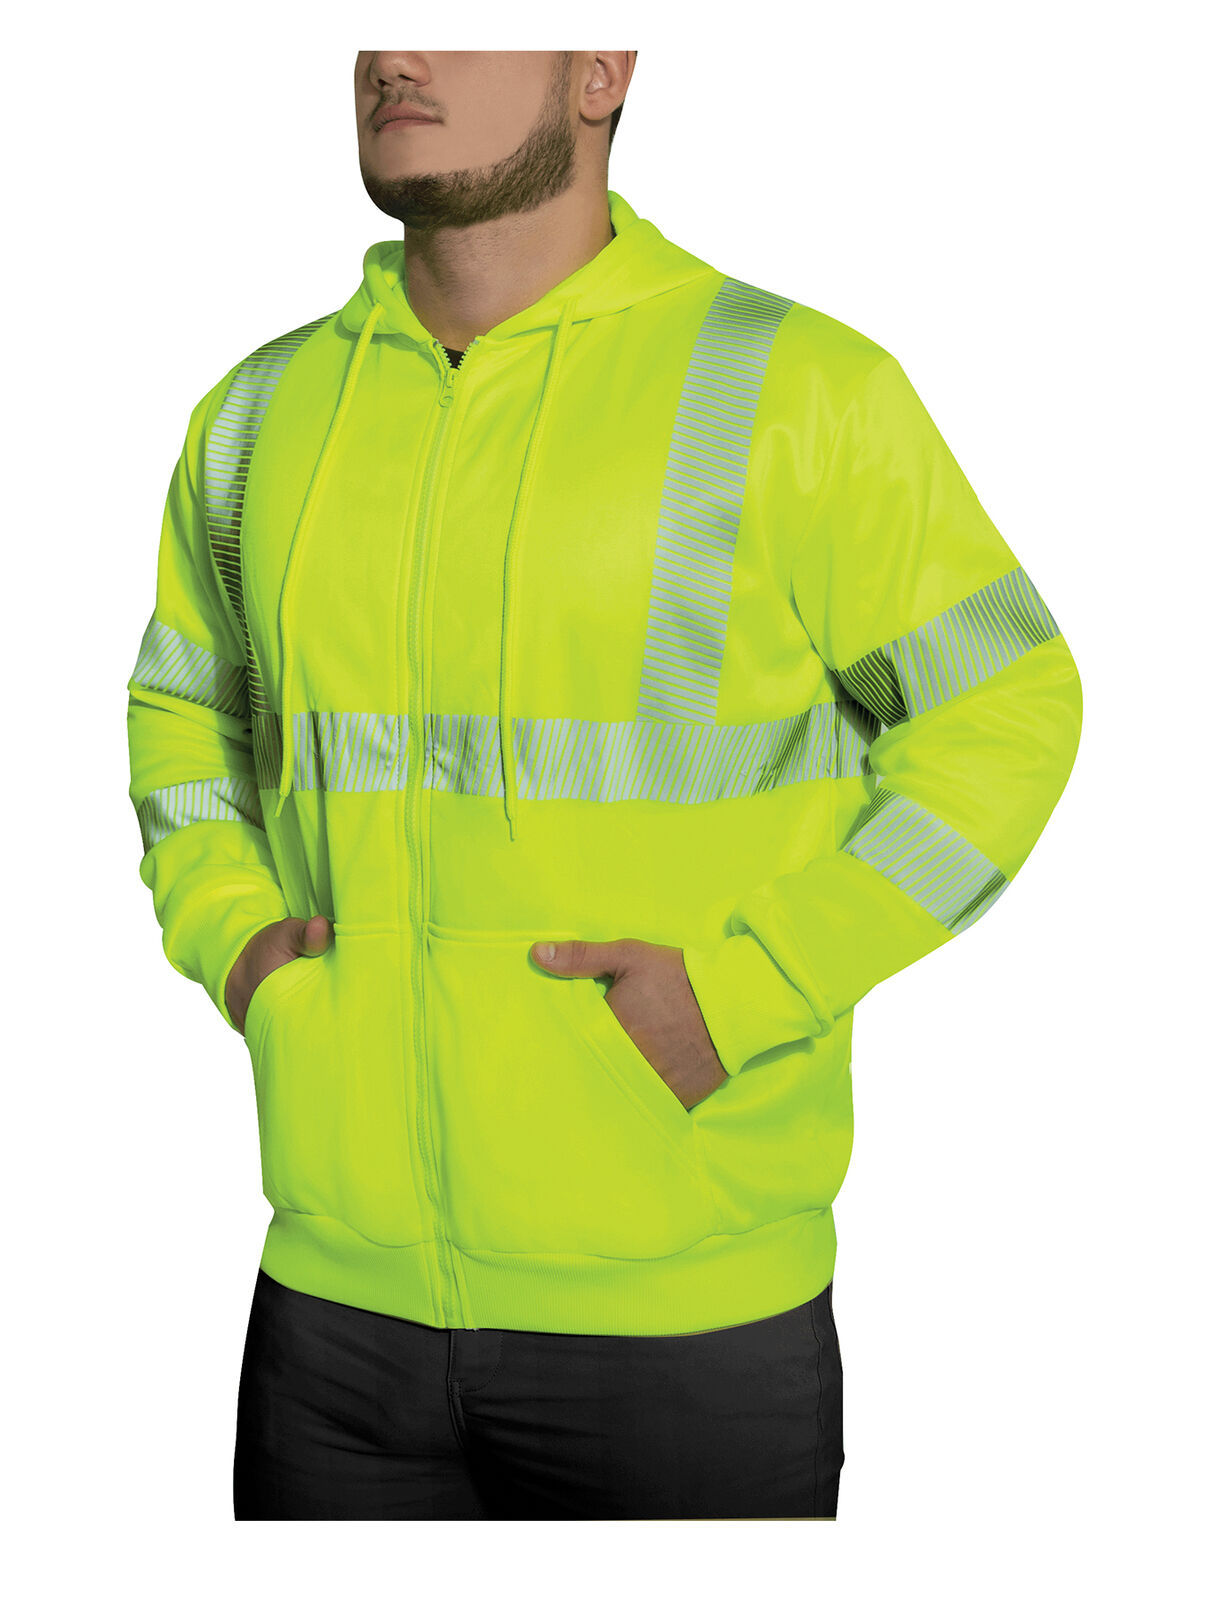 Men's Safety Green Hi-Visibility Hoodie w/ Reflective Strips Zip-Up Sweatshirt